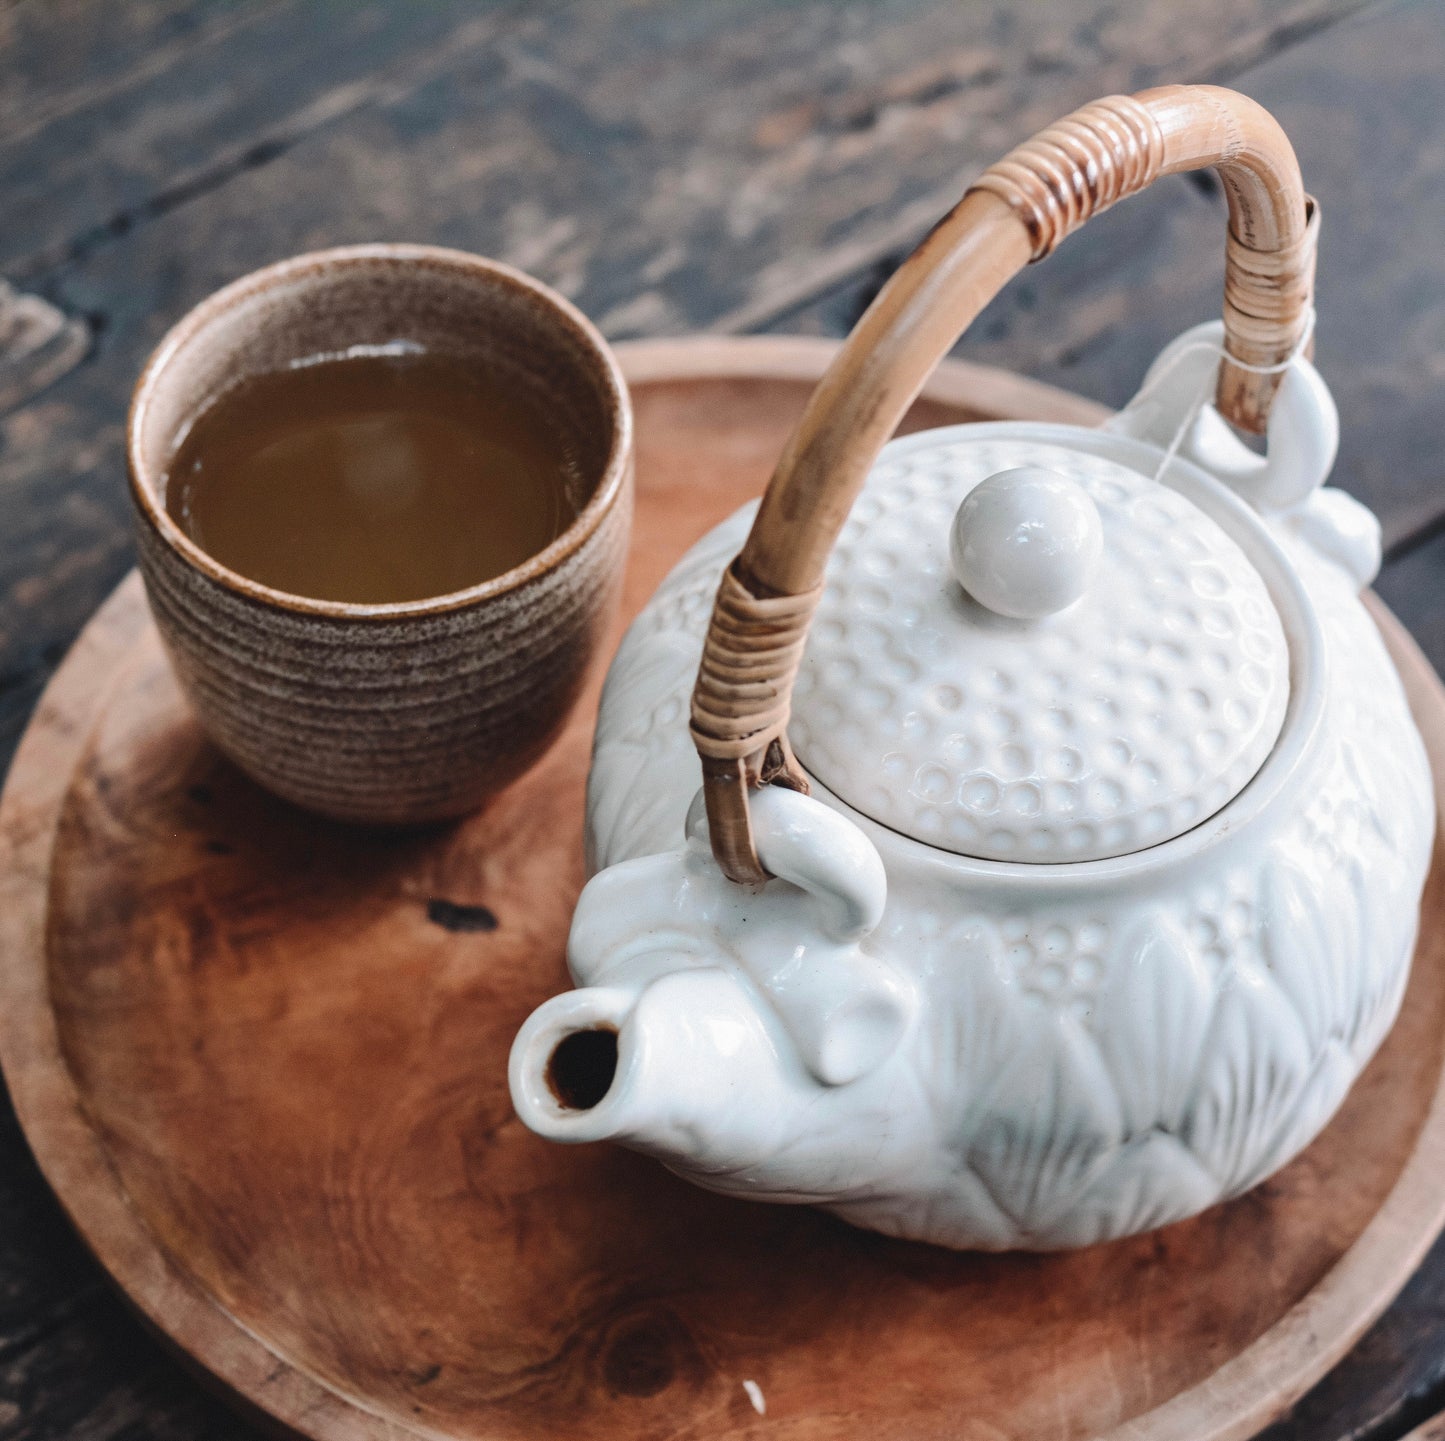 Pi Lo Chun - Grüner Tee (Premium)